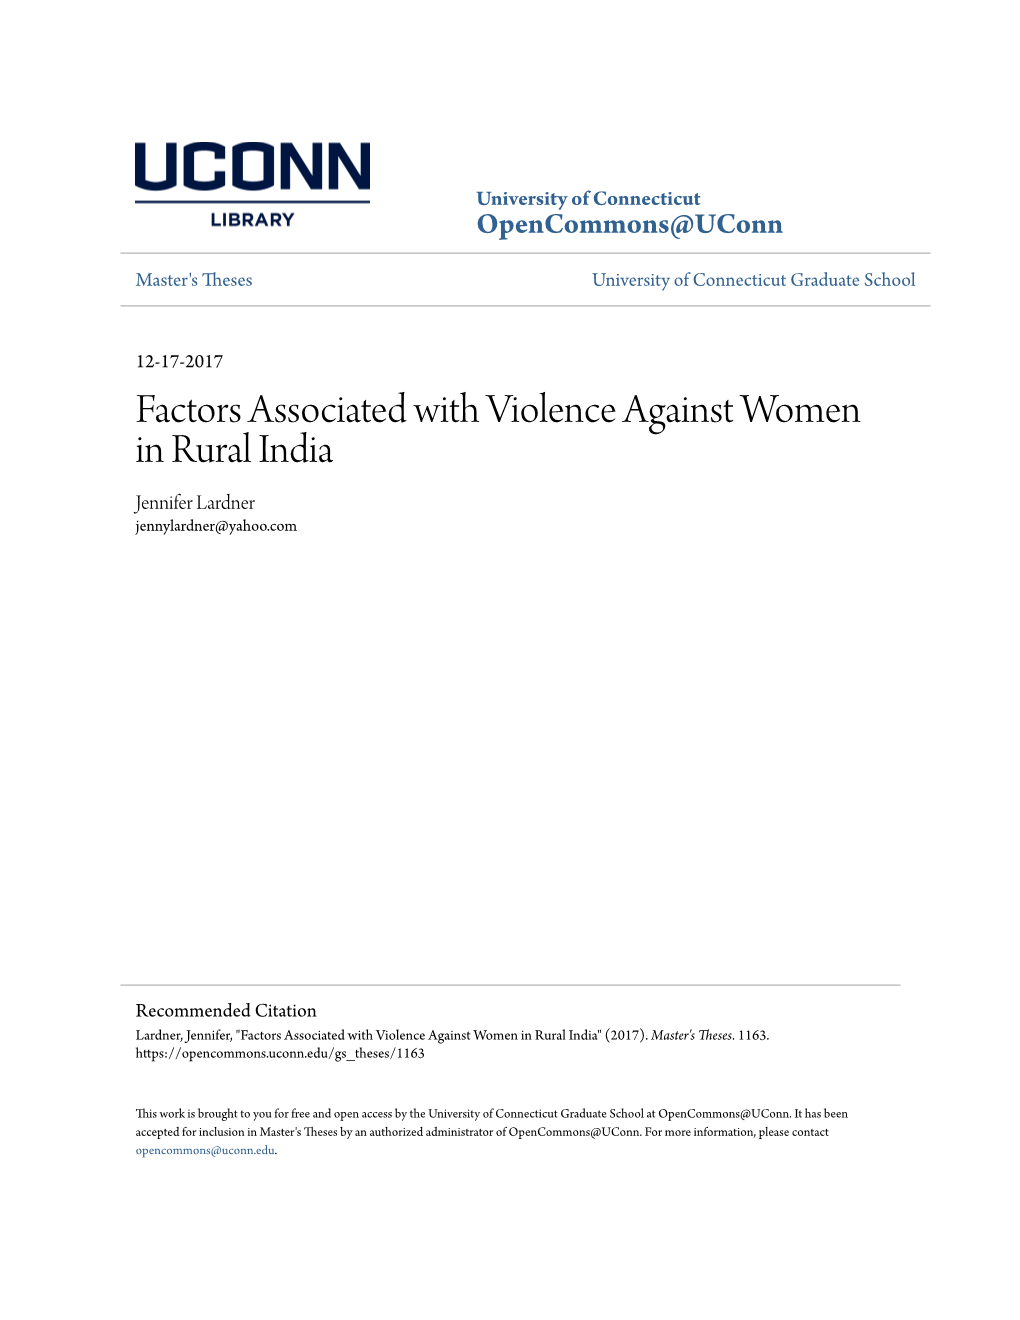 Factors Associated with Violence Against Women in Rural India Jennifer Lardner Jennylardner@Yahoo.Com